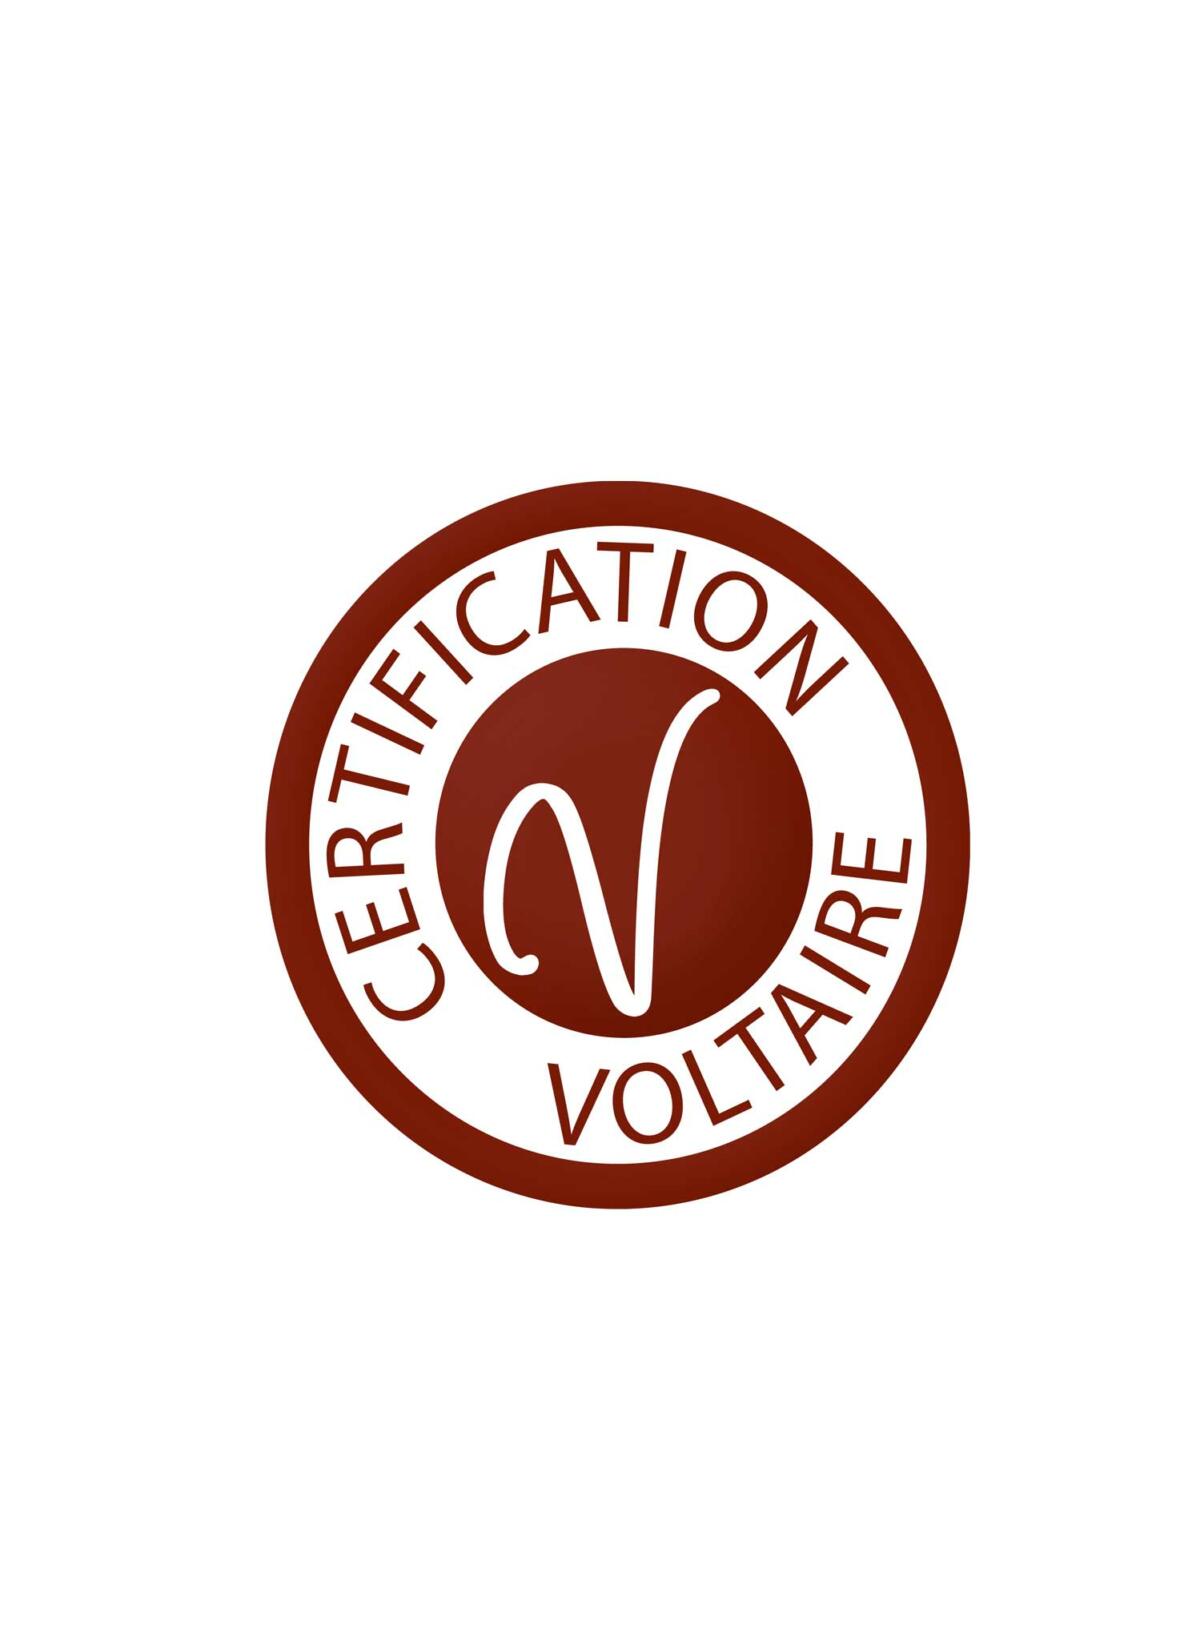 certification voltaire